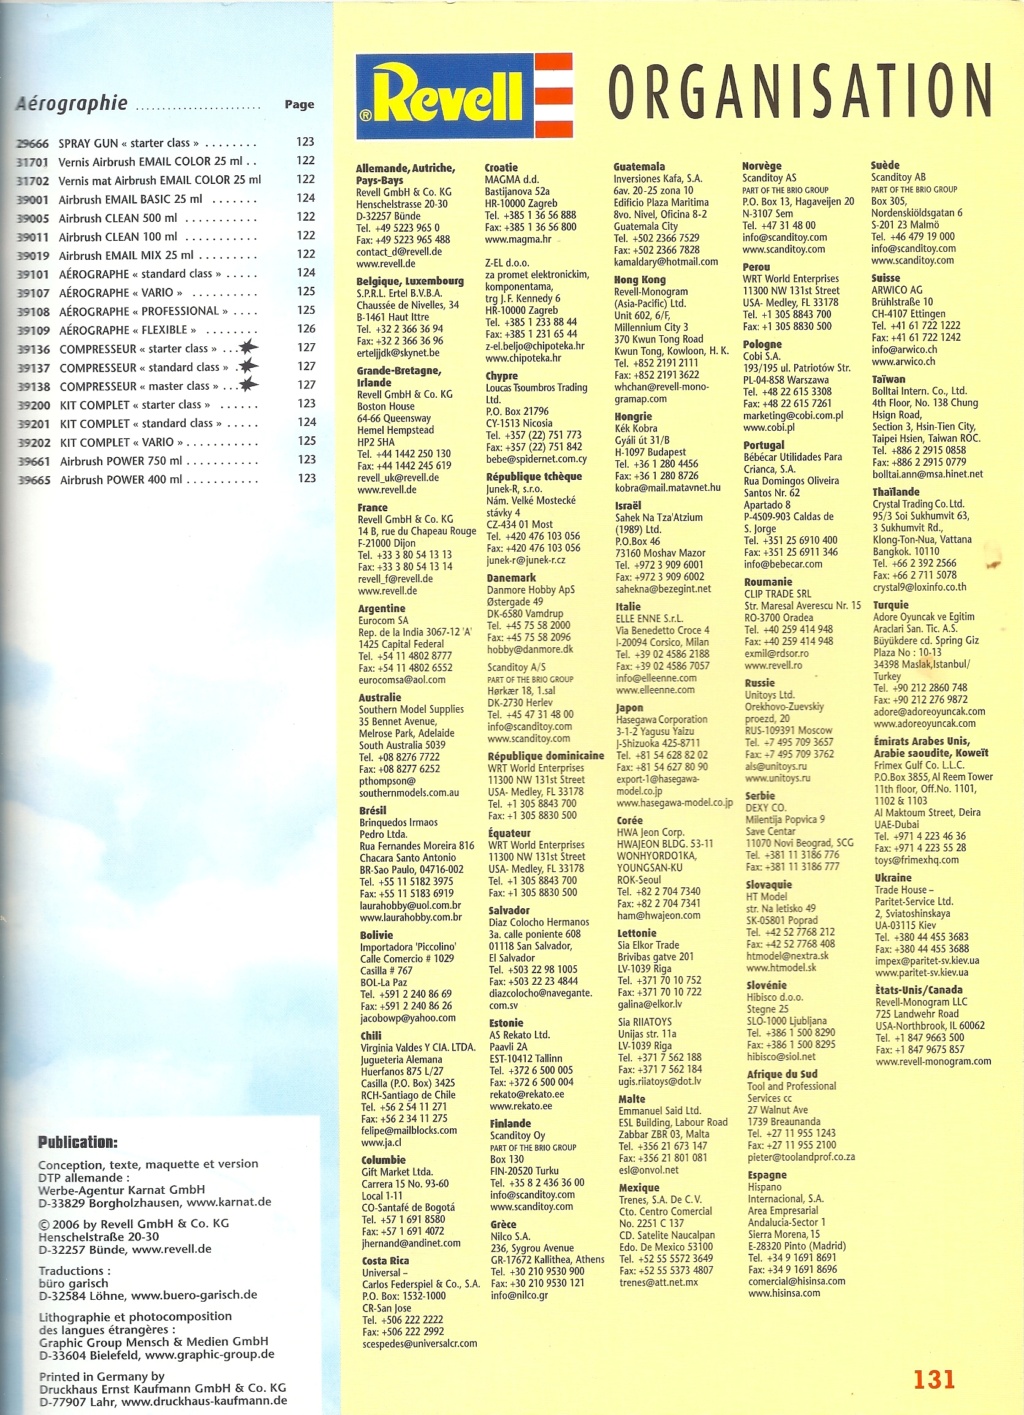 [REVELL 2007] Catalogue 2007  Reve1882